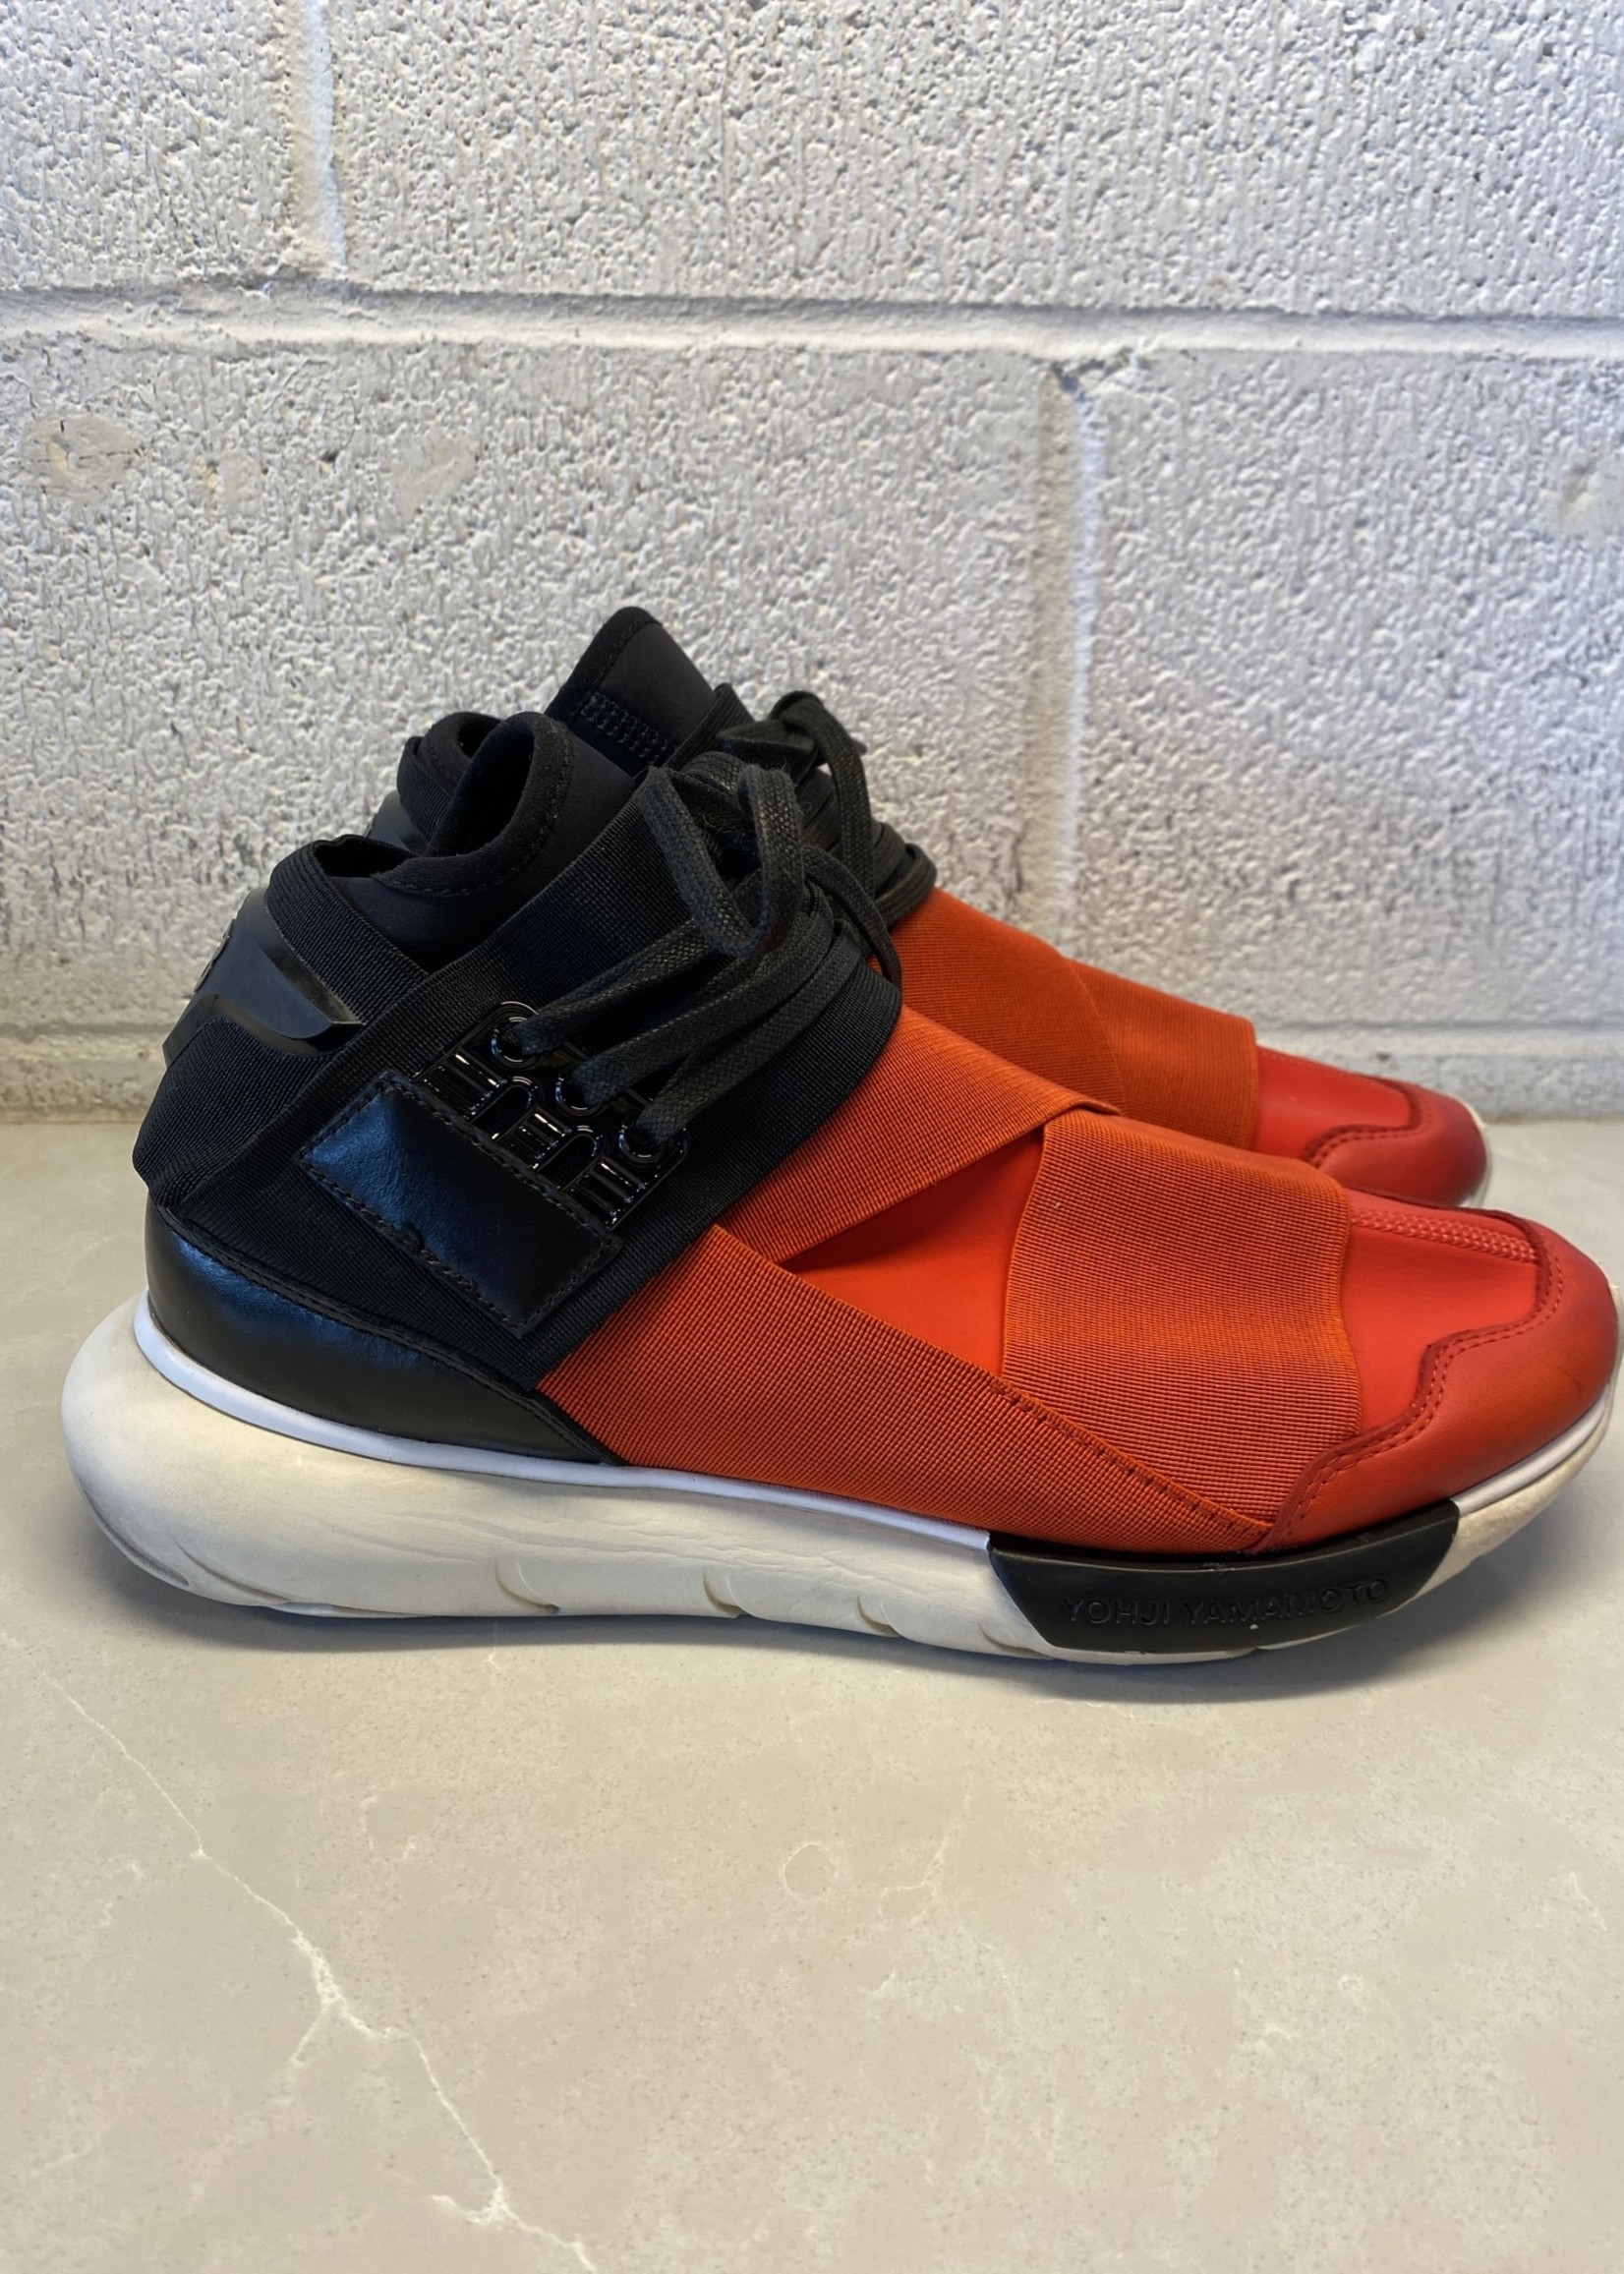 Adidas Y3 Qasa High Black Orange Sneakers 8